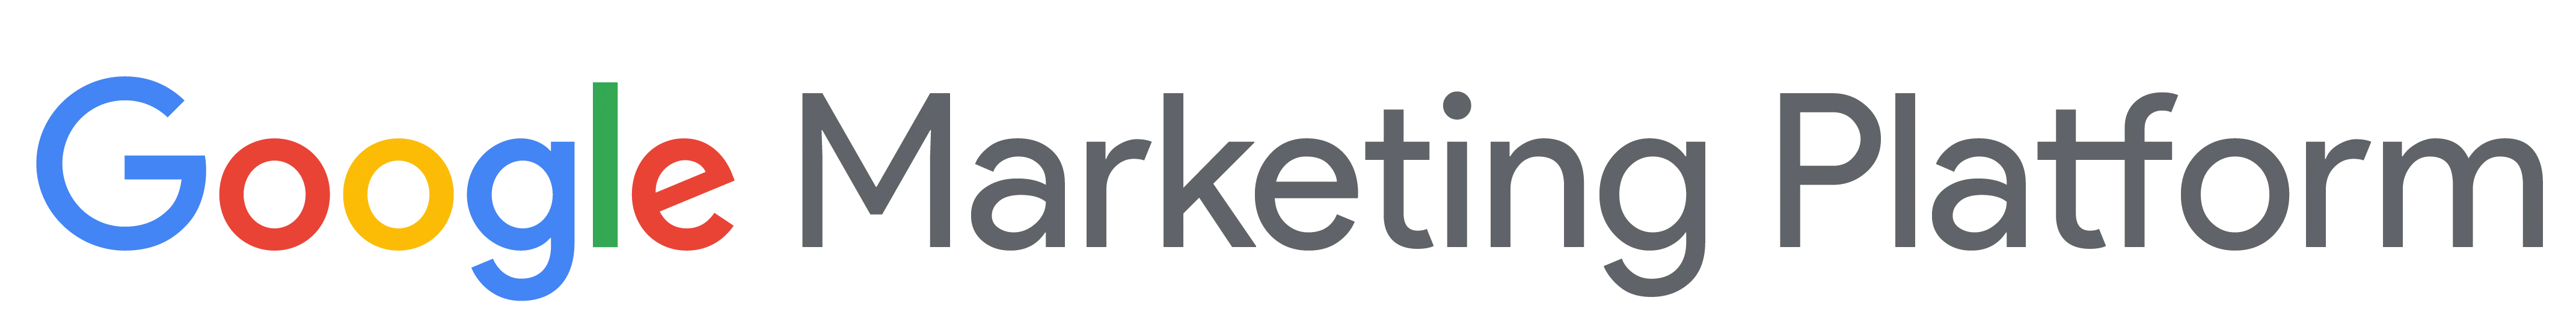 Google Marketing Platform logo